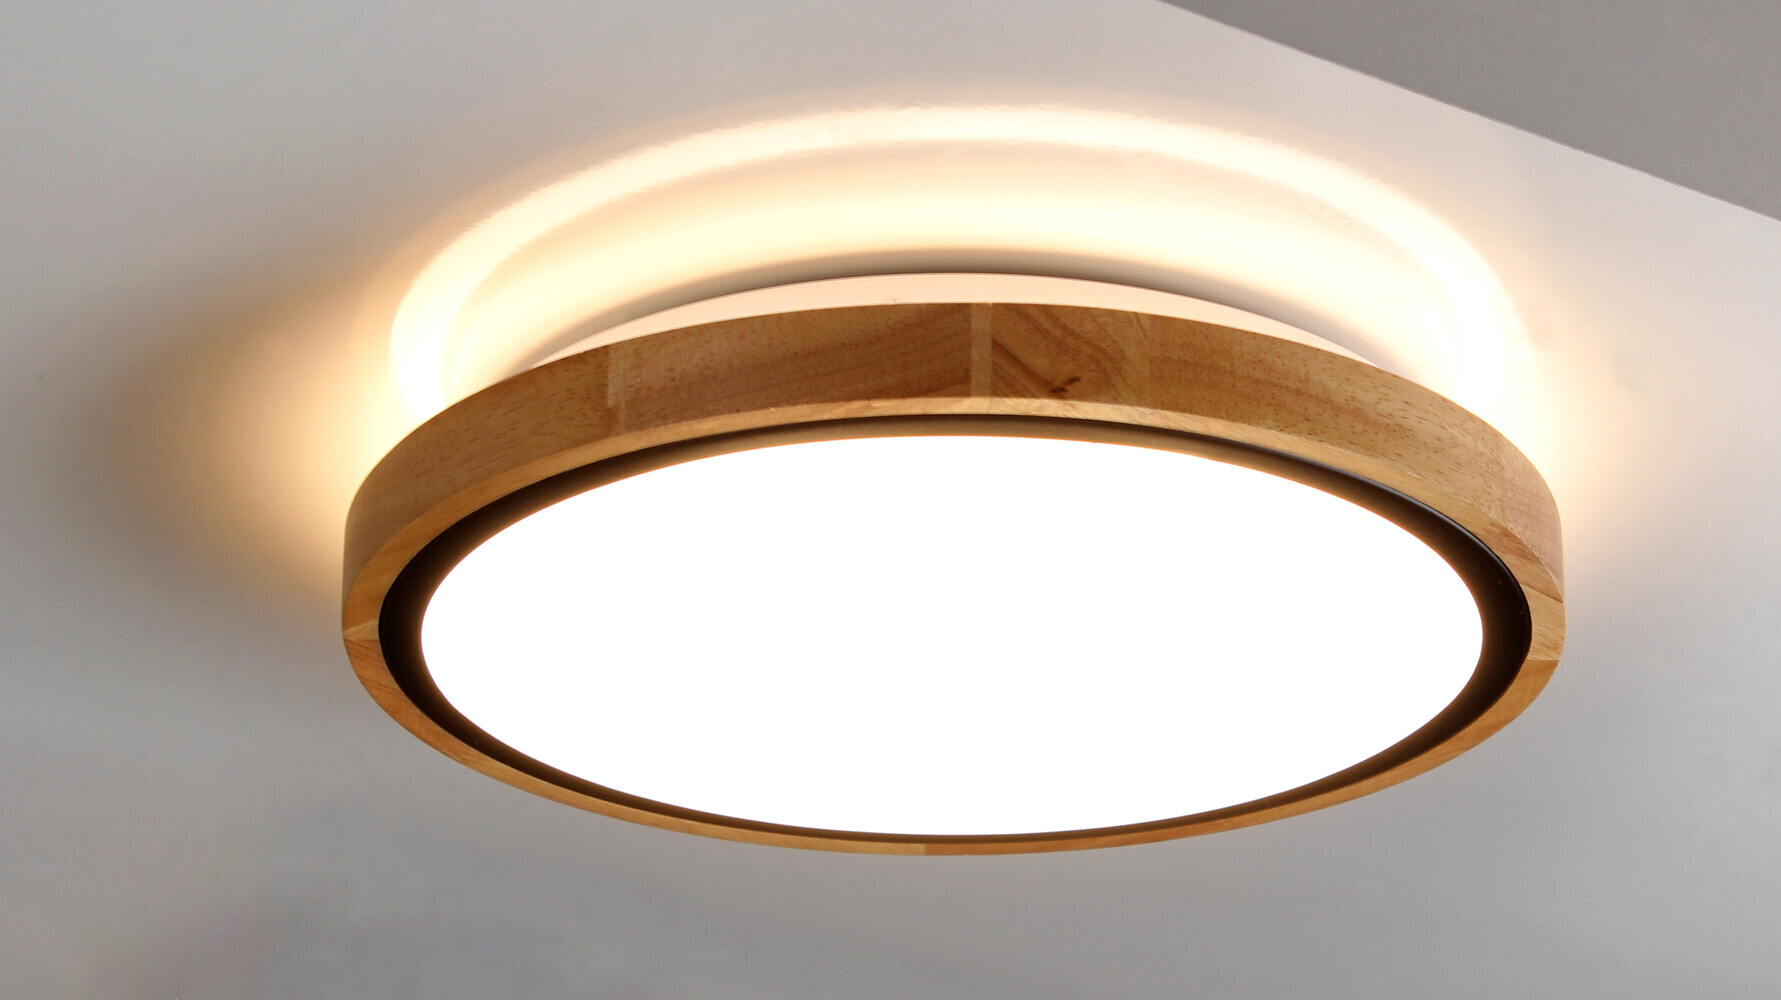 Hochwertige ECO-LIGHT LED Deckenleuchte mit modernem Design